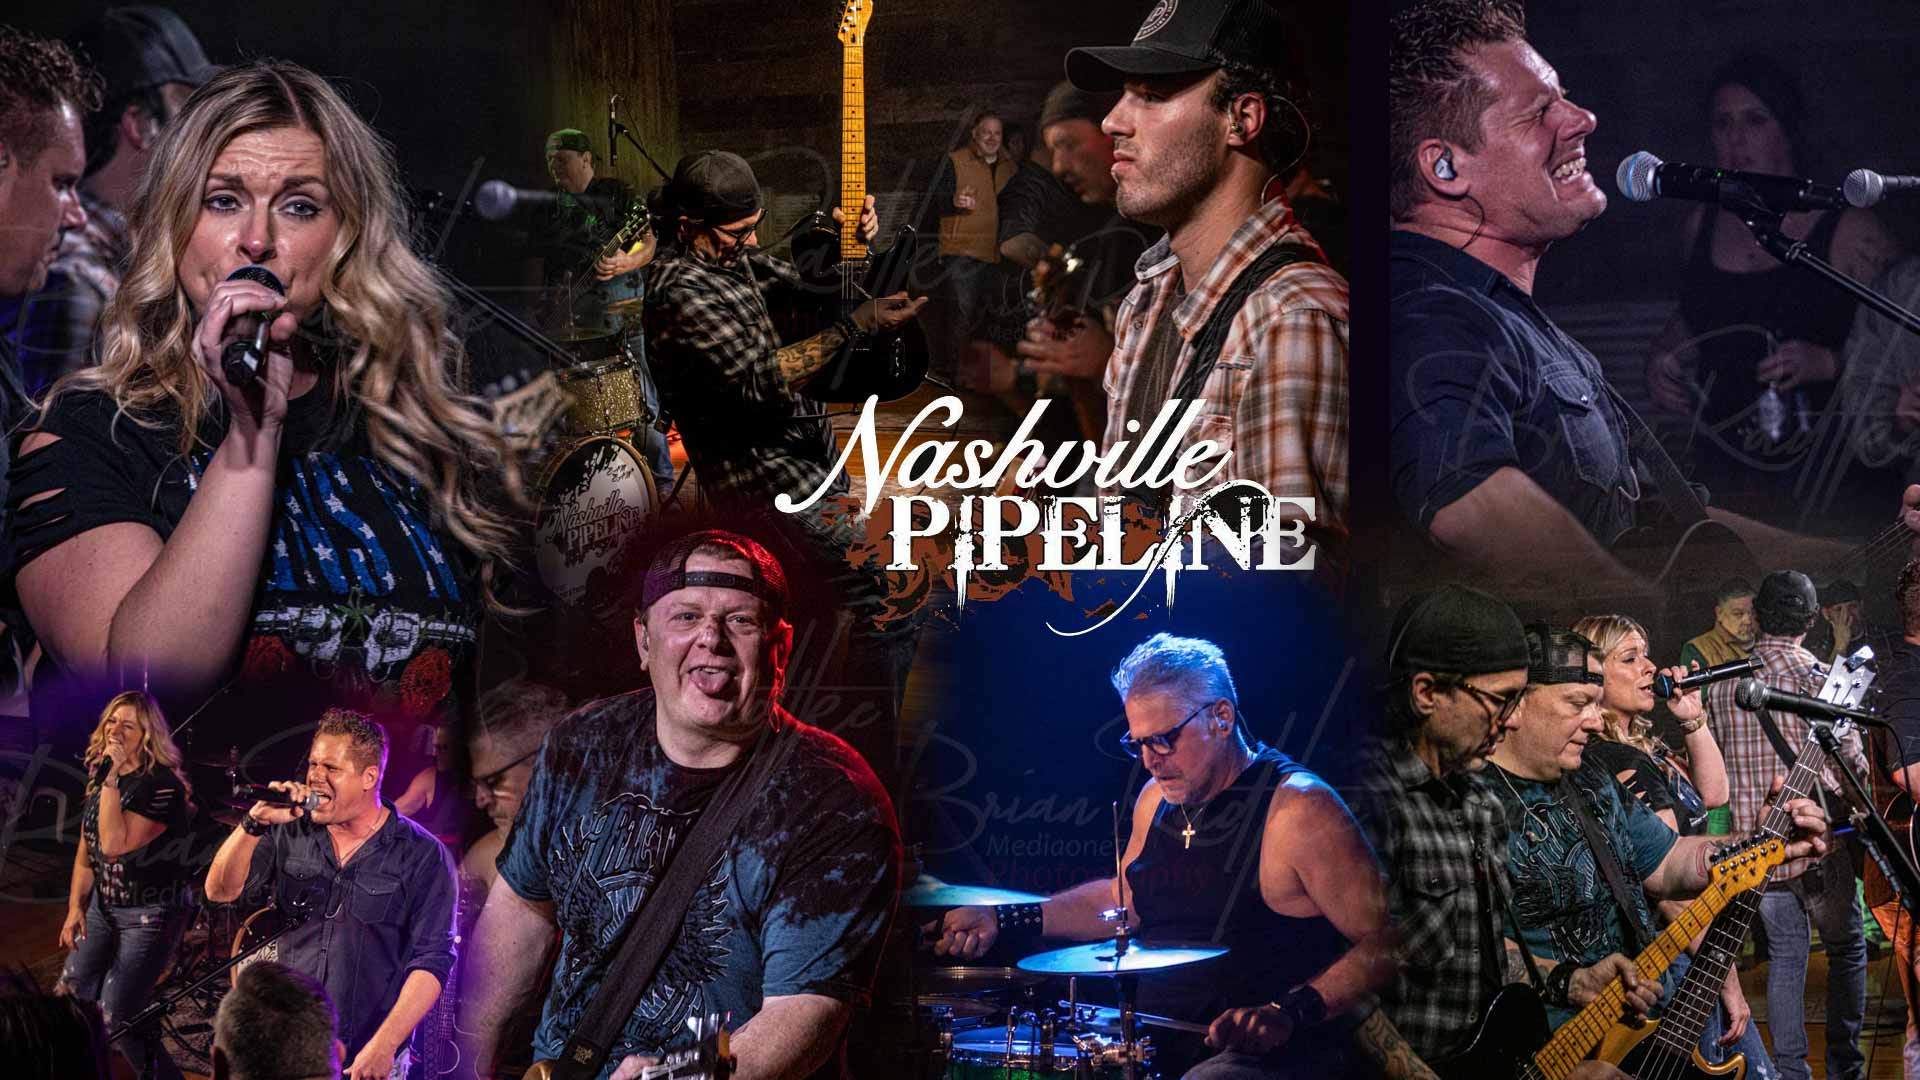 Nashville Pipeline at 10th Frame in Appleton